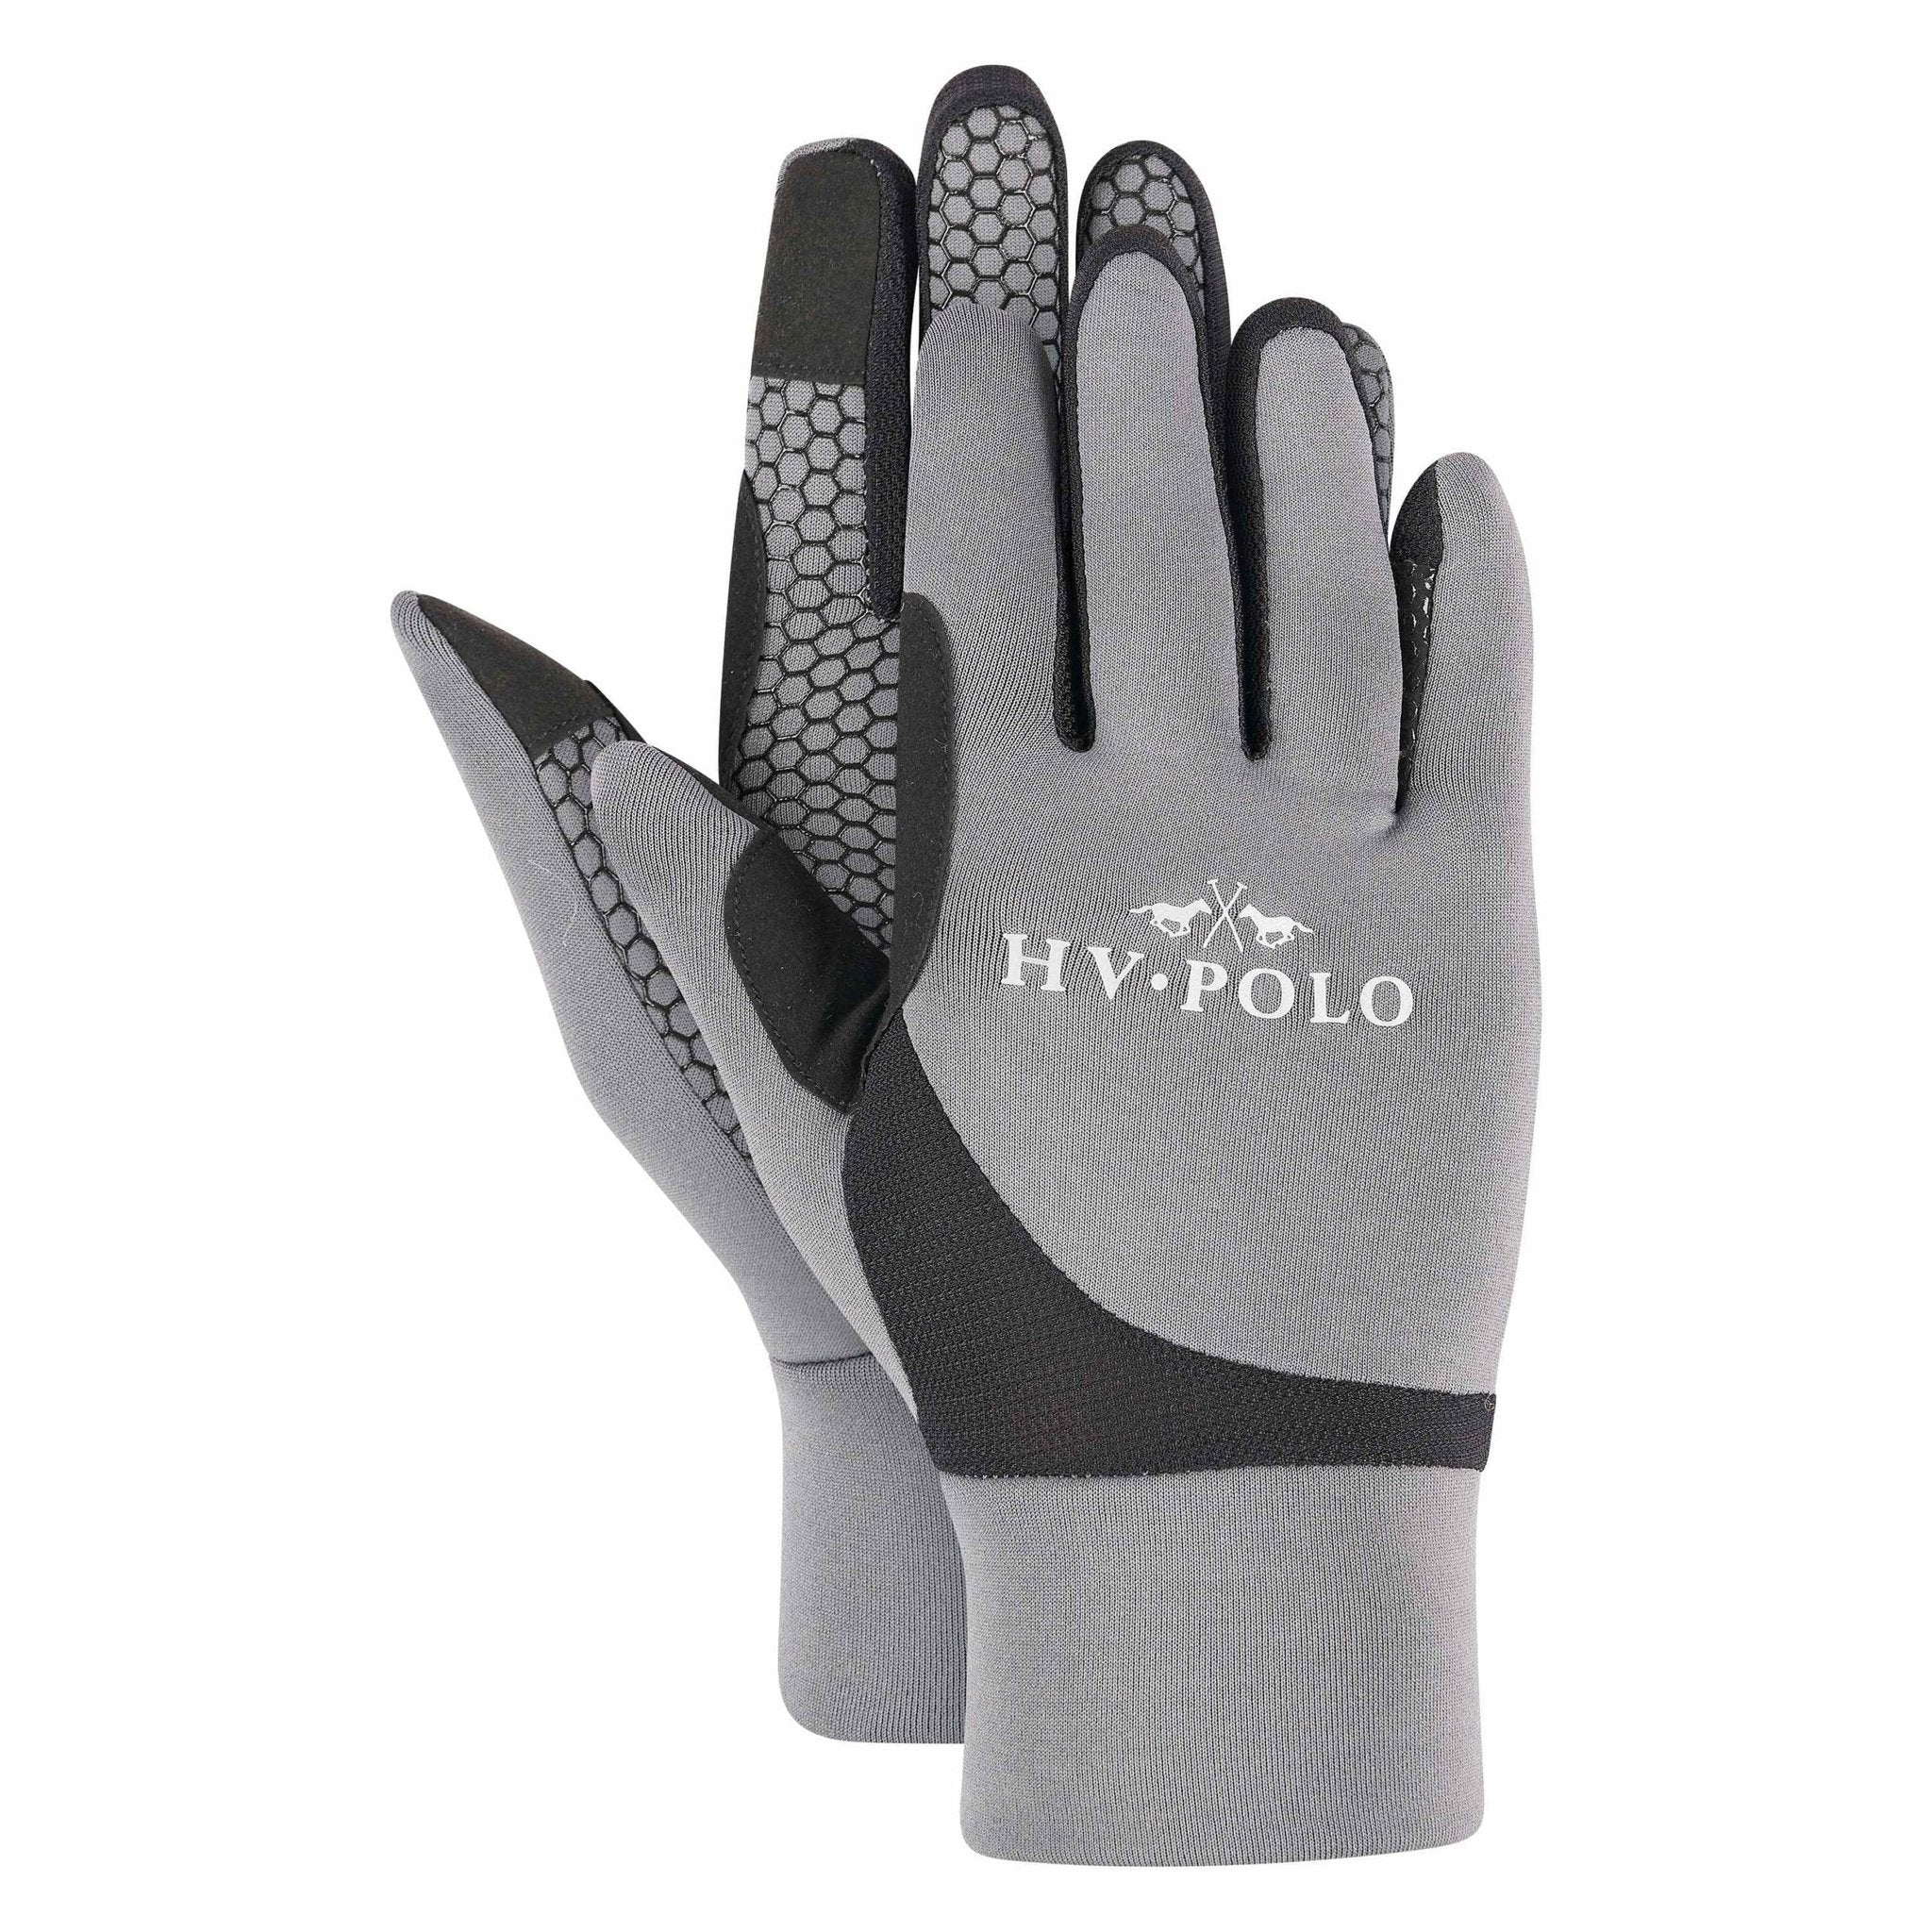 HV Polo Ladies Gloves HVPTech-mid season